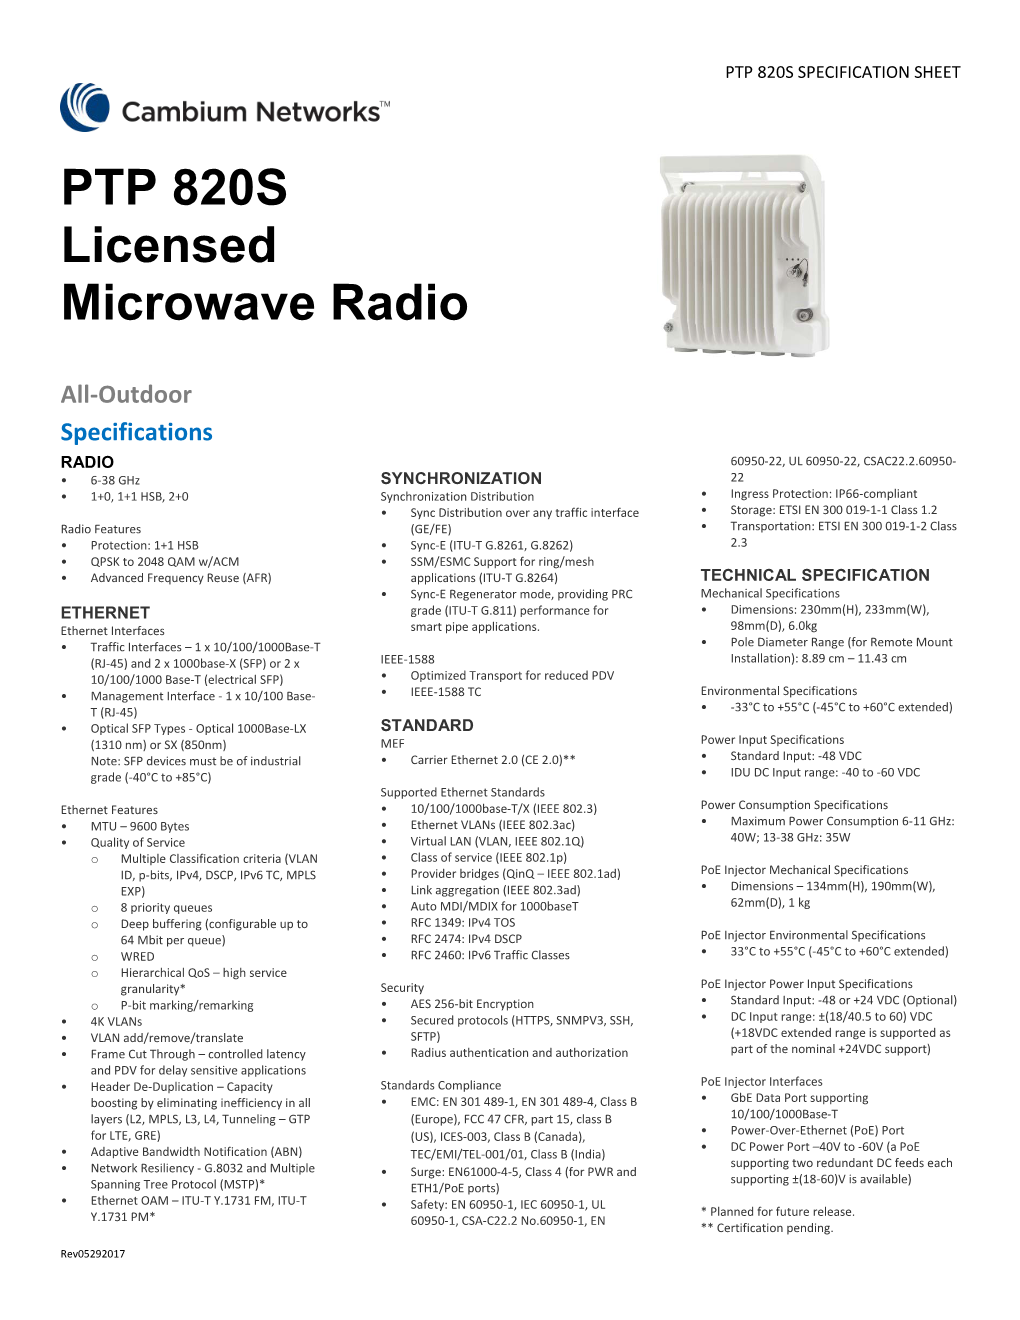 PTP 820S Licensed Microwave Radio